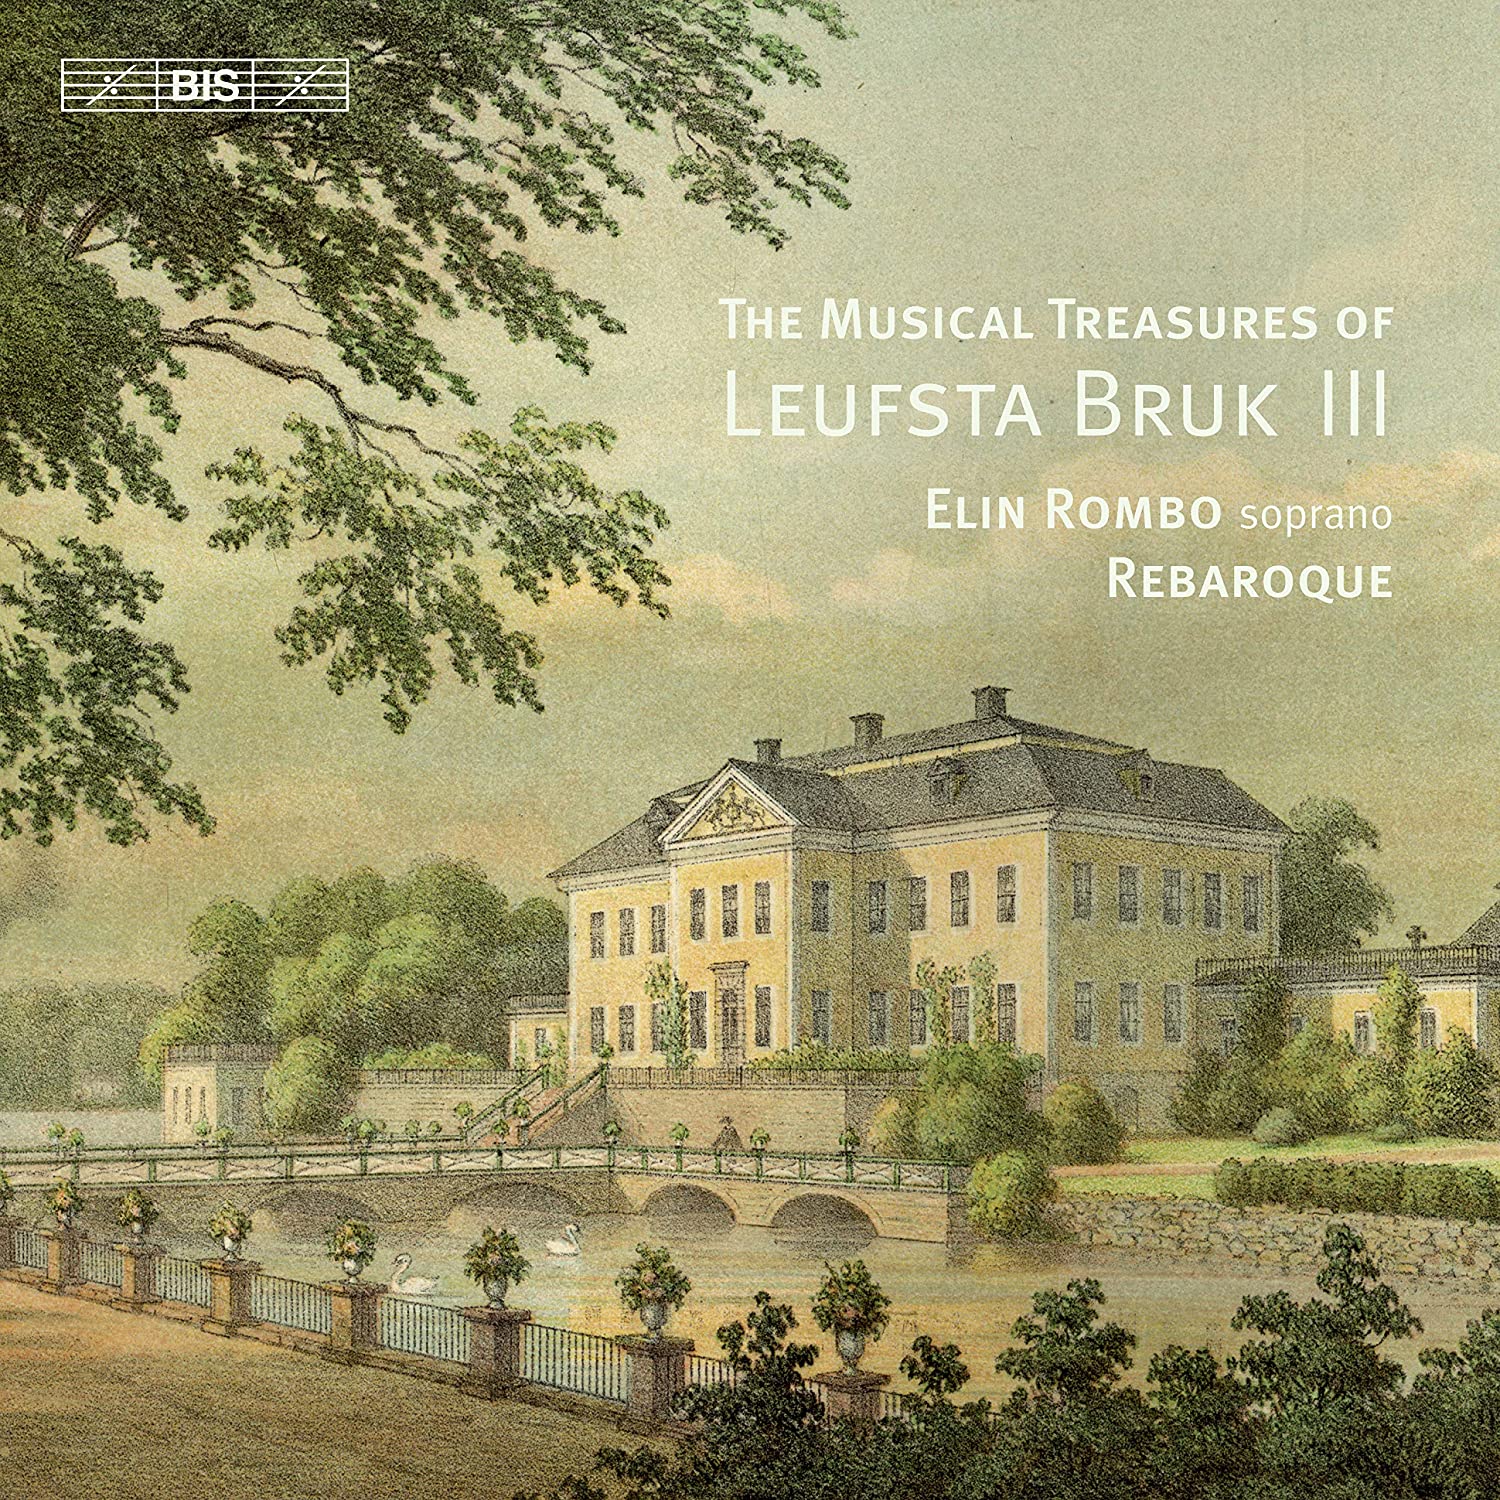 The musical treasures of Leufsta Bruk volume 3 CD cover